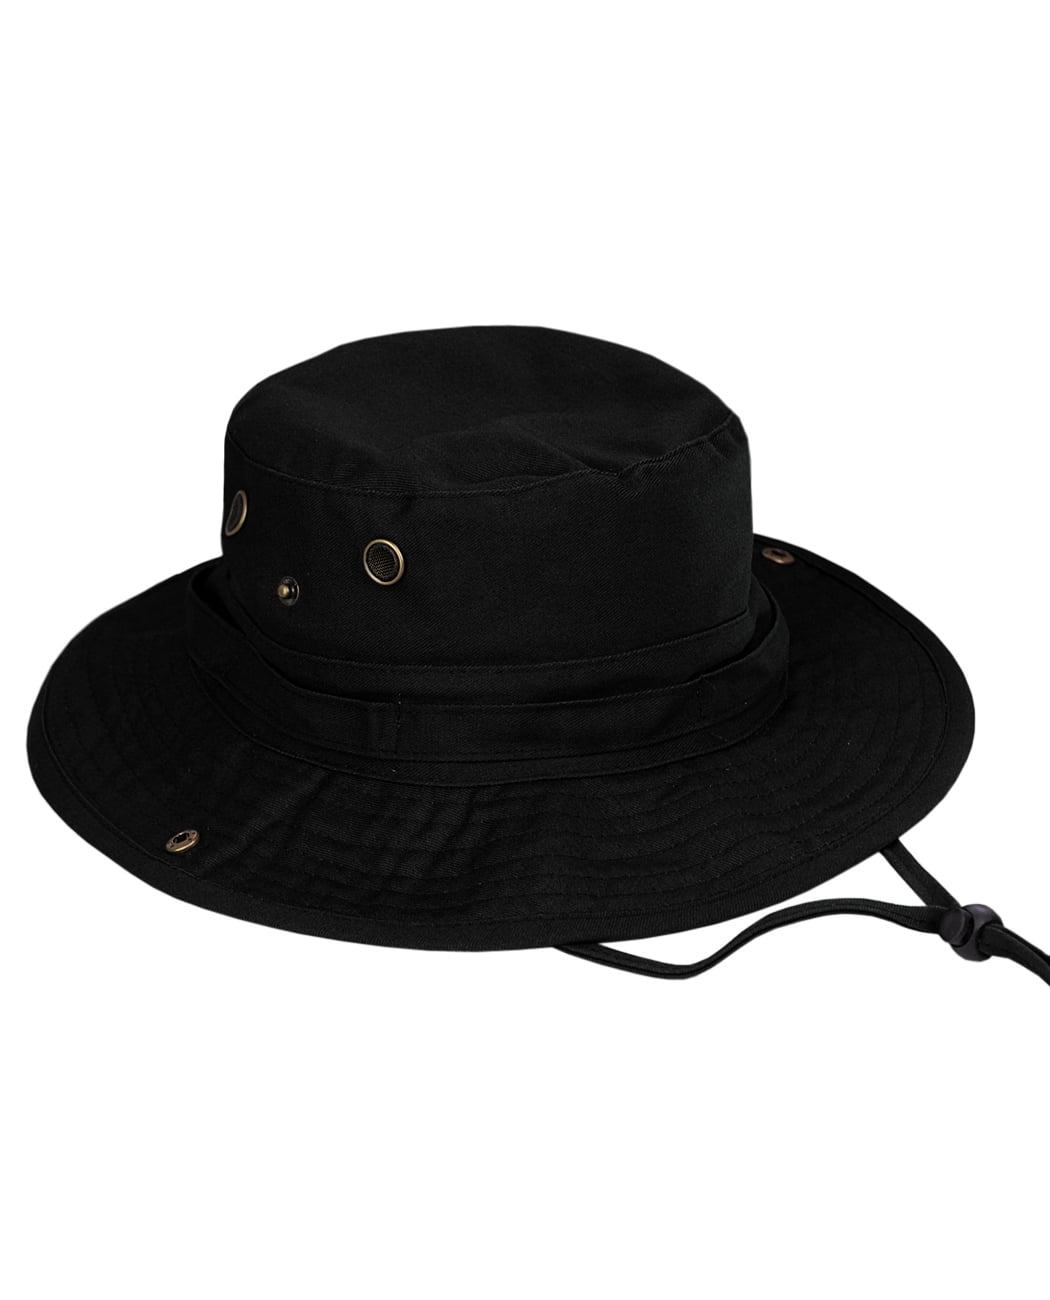 NYFASHION101 Men's Crushable Snap Brim Cotton Outdoor Bucket Sun Hat ...